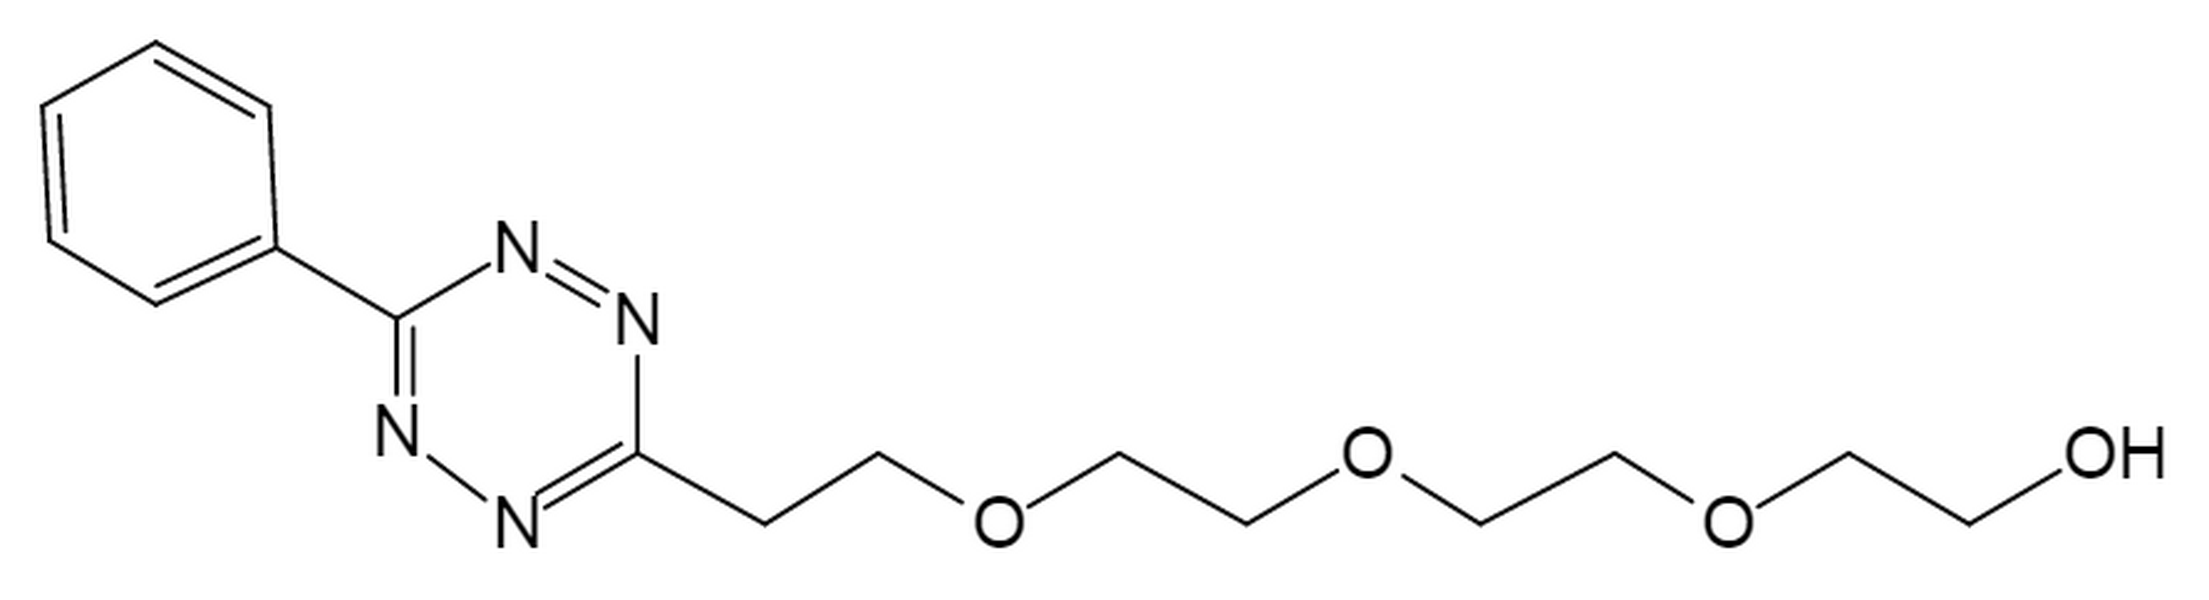 PEG3-tetrazine